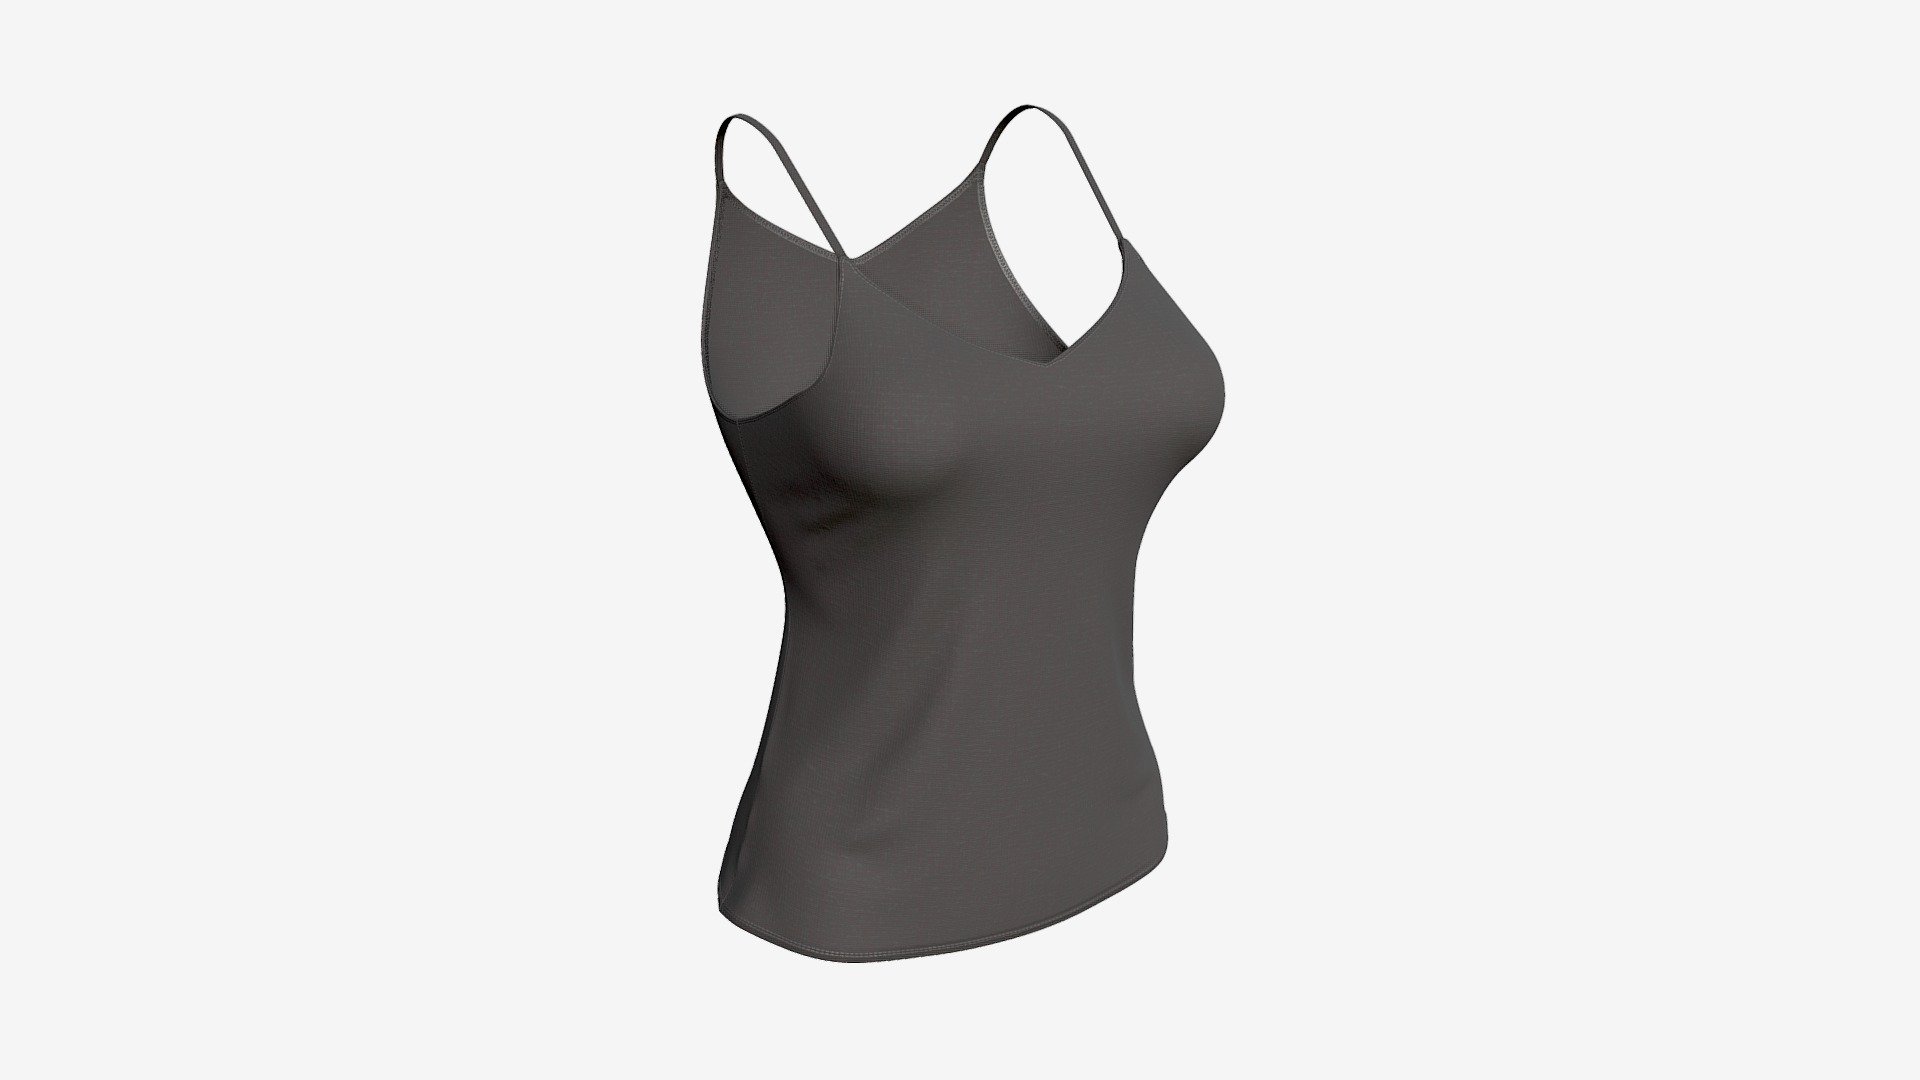 Strap Vest Top For Women Black Mockup Buy Royalty Free 3d Model By Hq3dmod Aivisastics